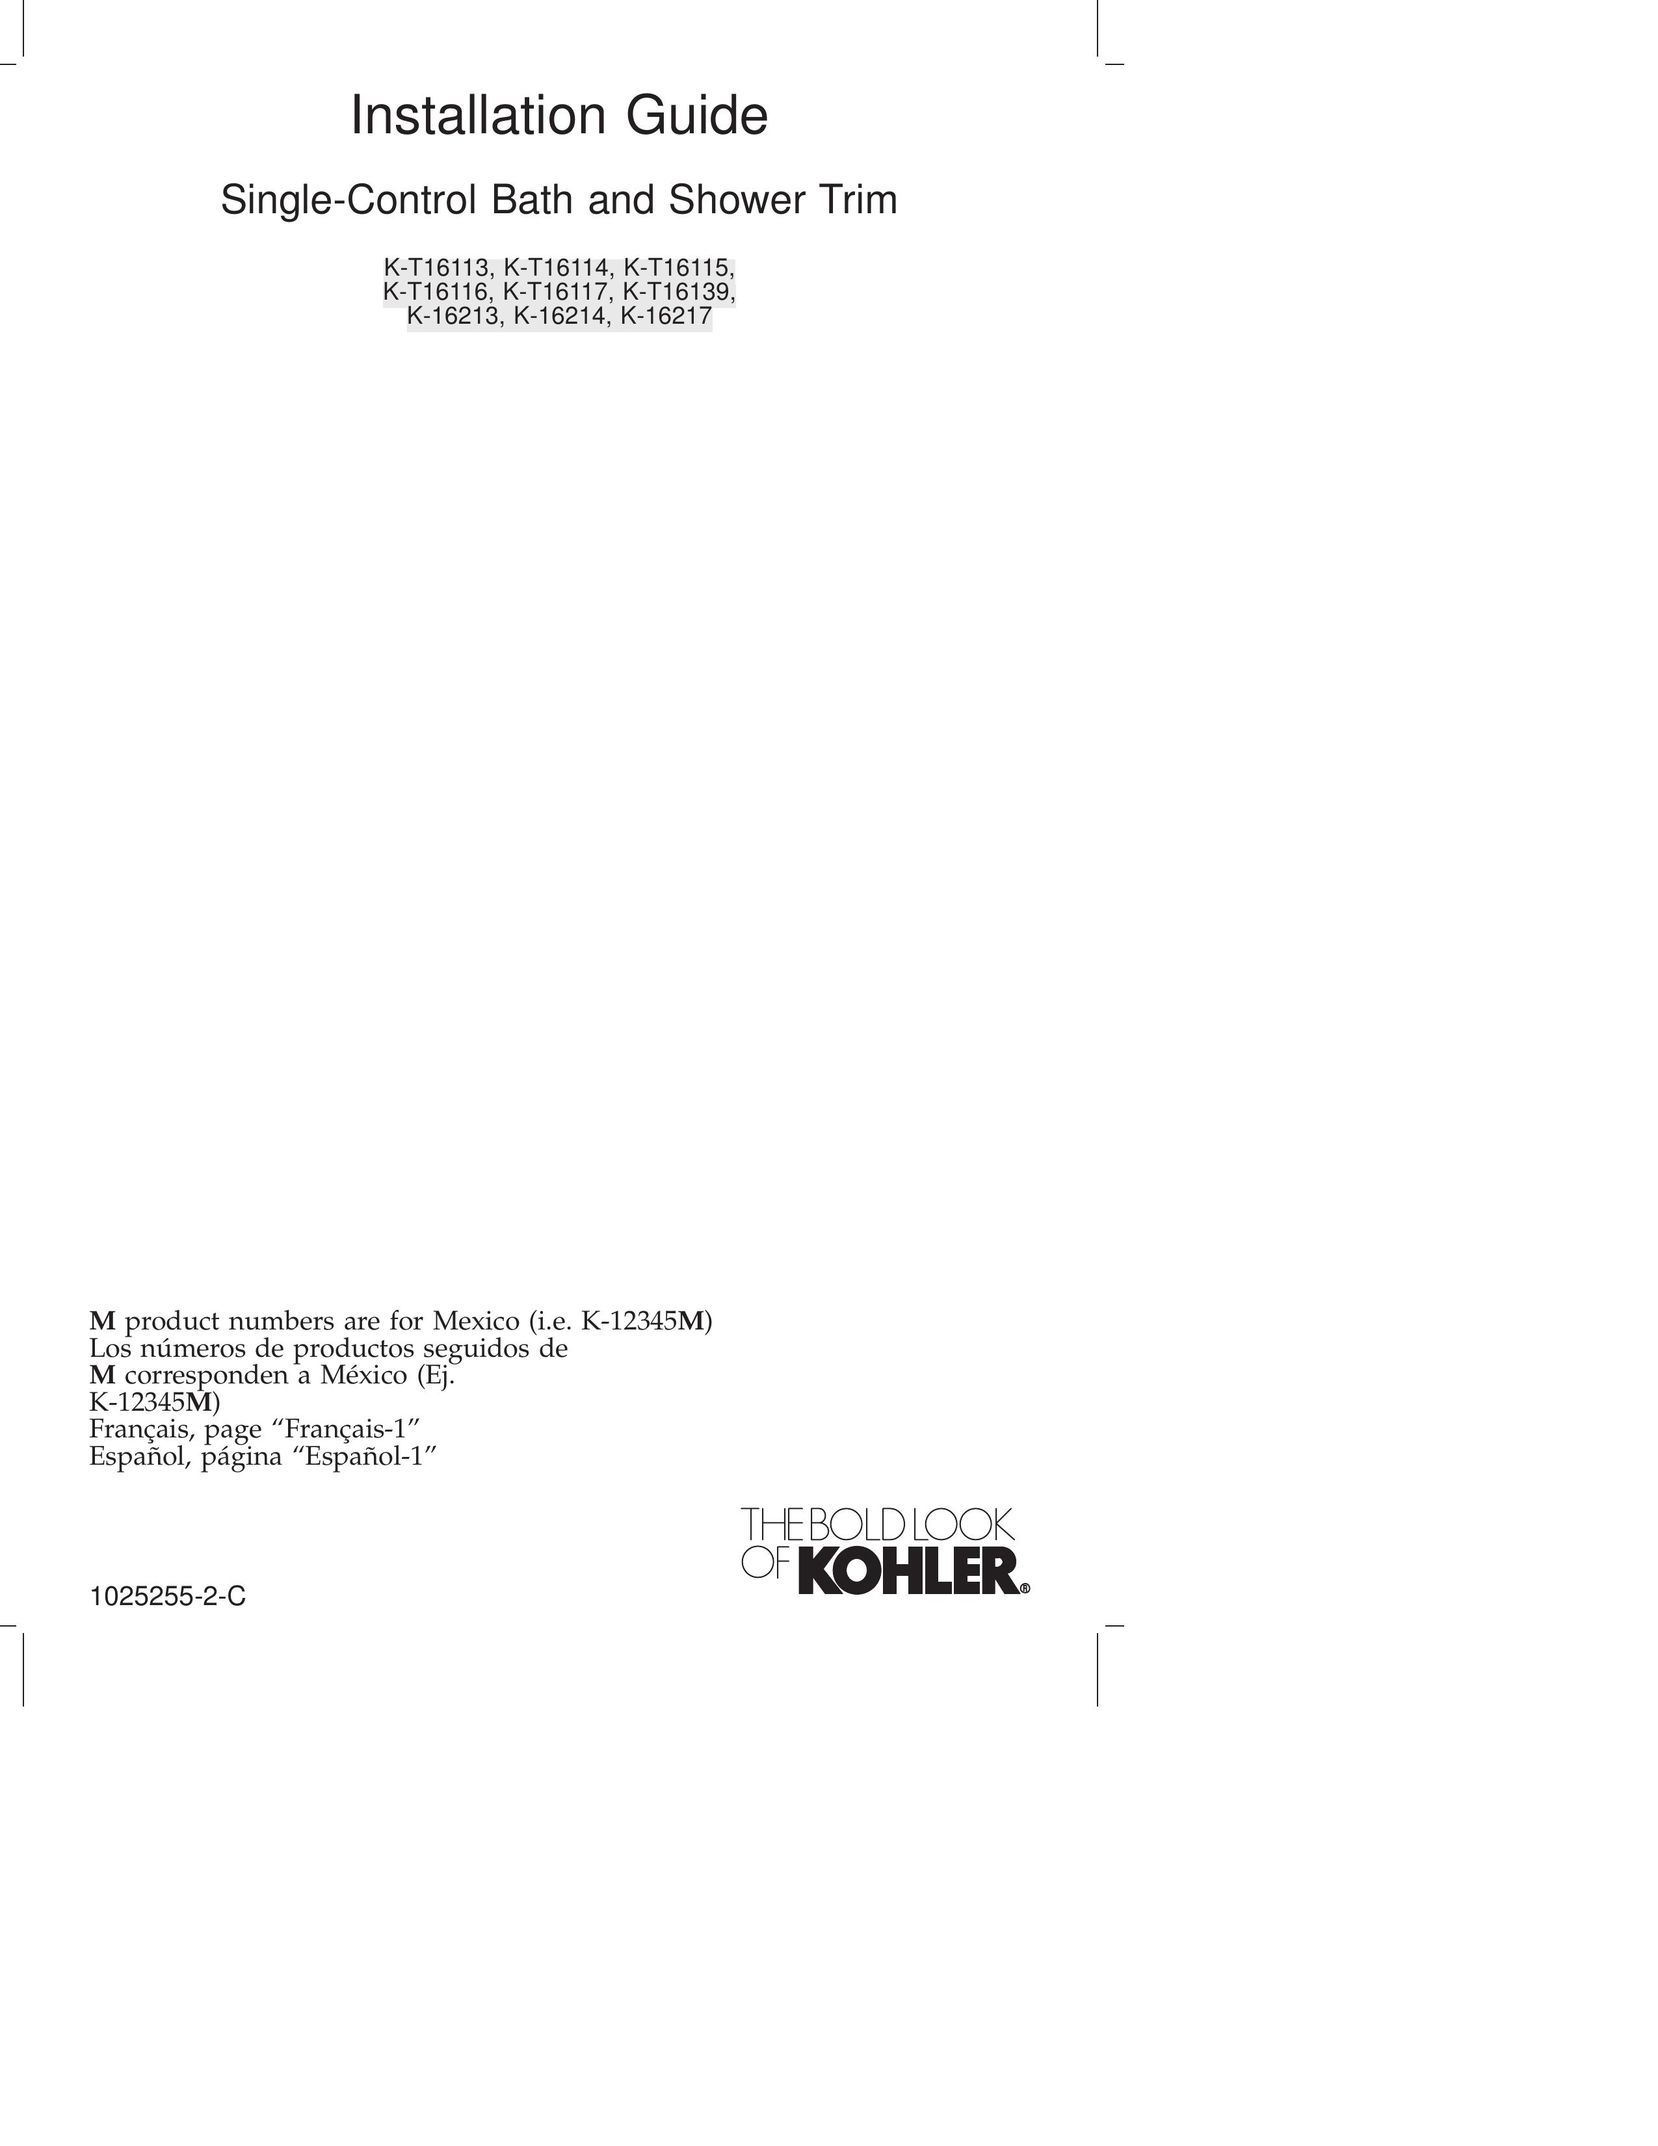 Kohler K-16213 Plumbing Product User Manual